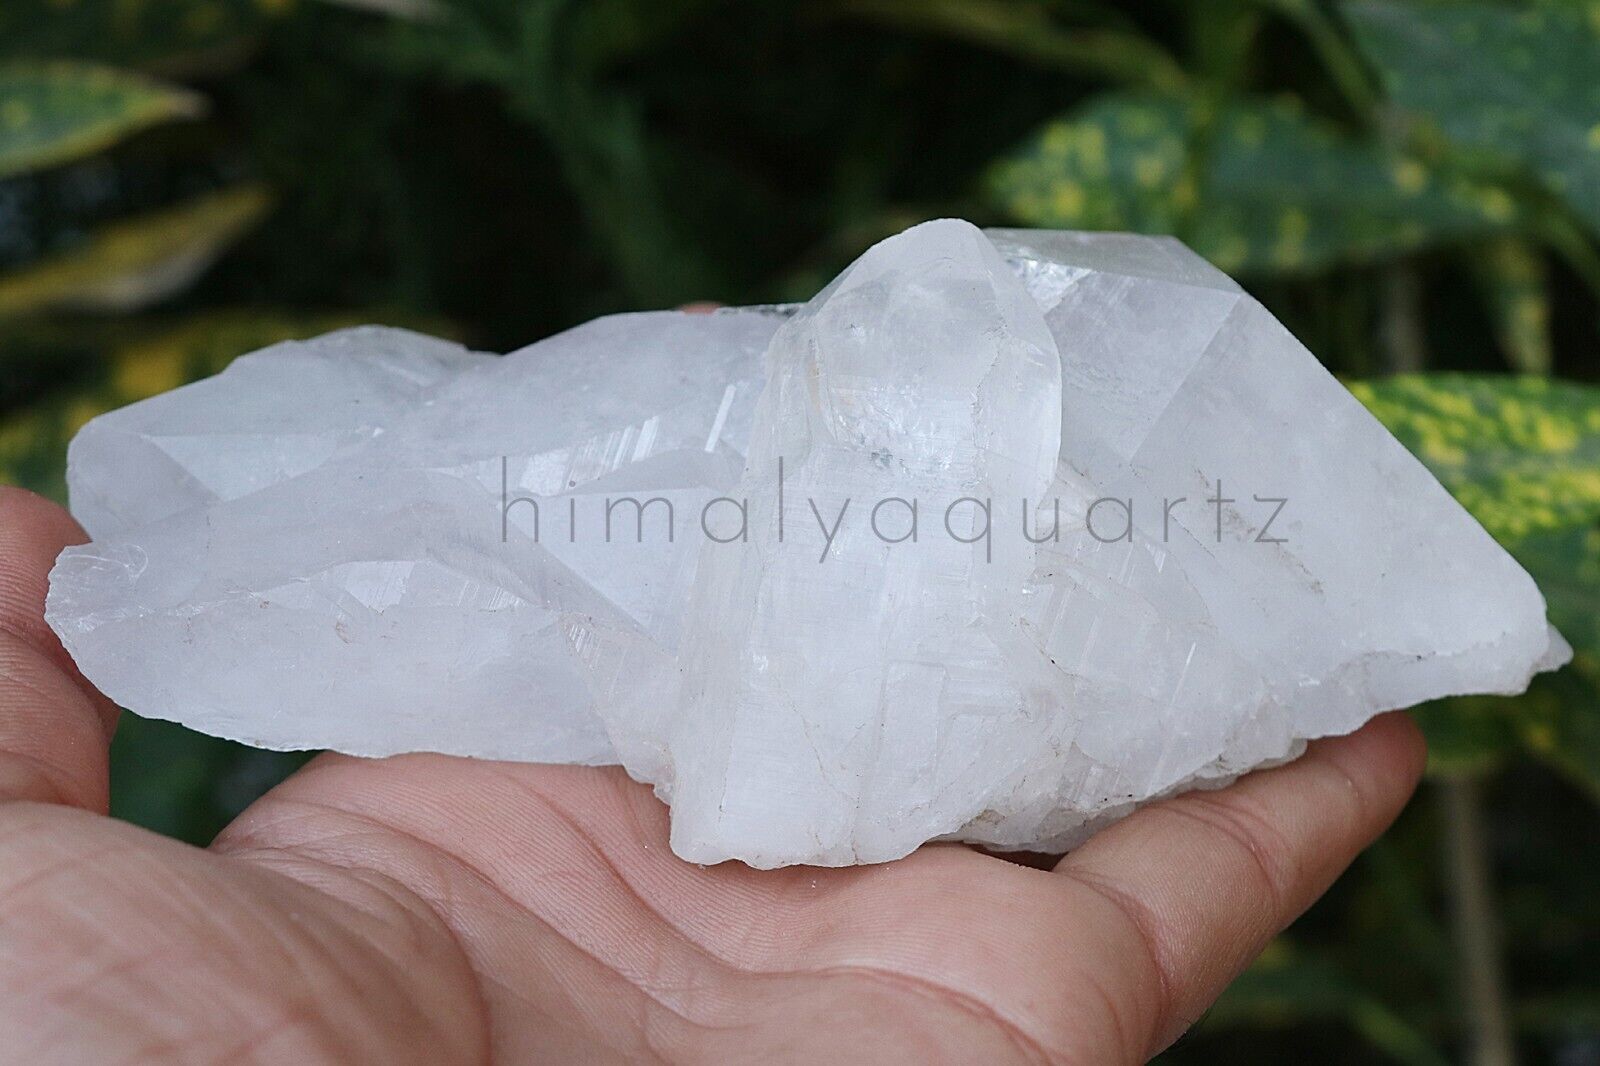 Home decorative and meditation healing minerals white quartz 398 gram Specimen